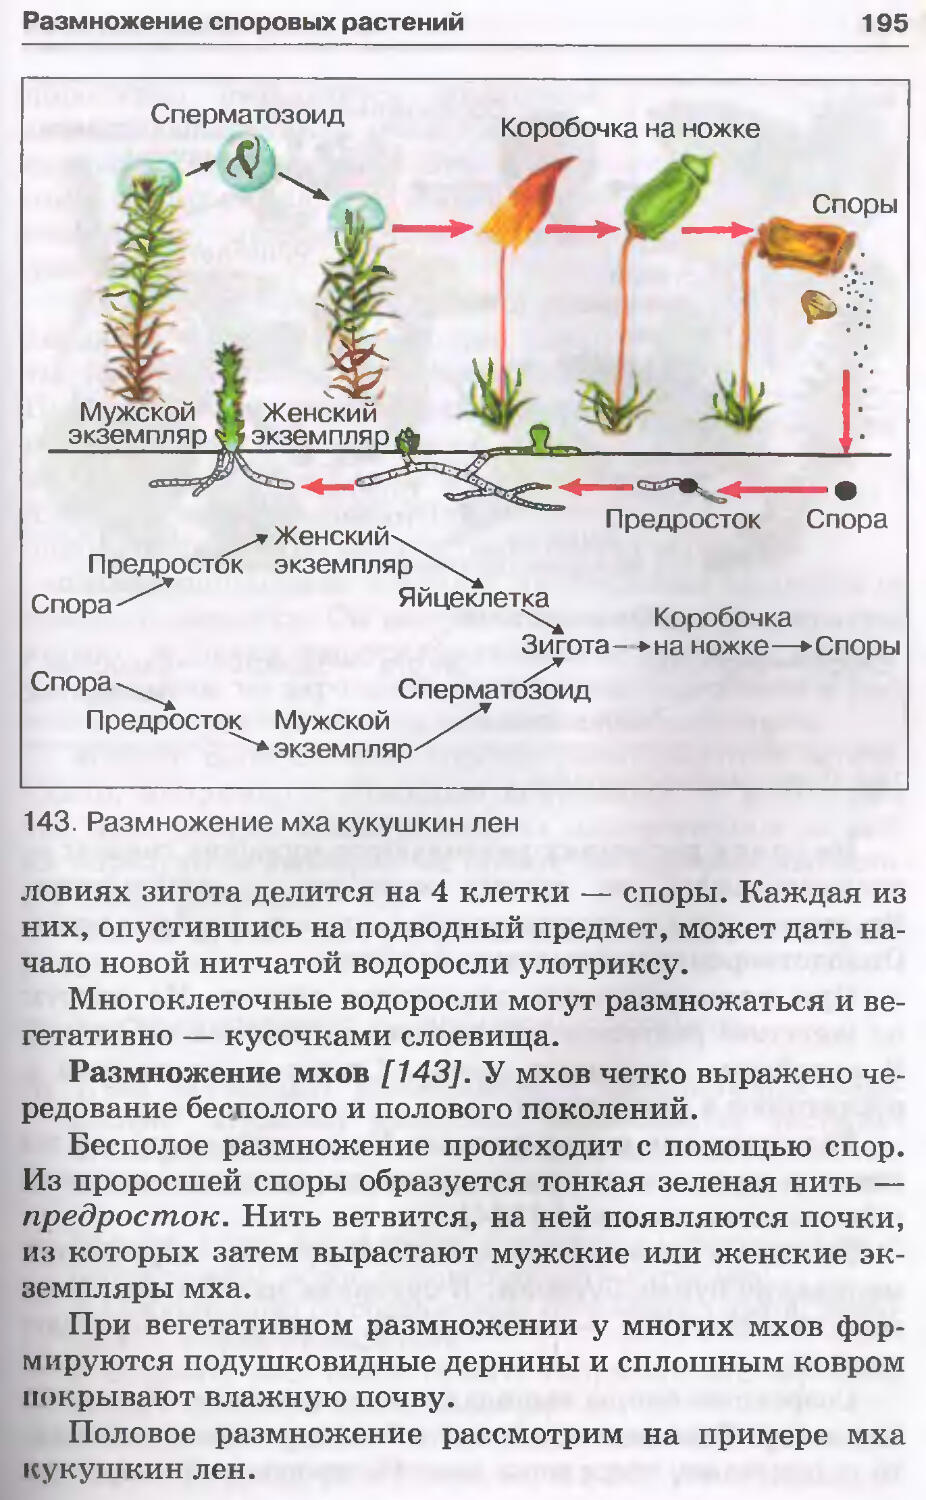 Циклы высших споровых растений. Споровые растения. Схема развития споровых растений. Споровые растения примеры. Споровые растения 6 класс.